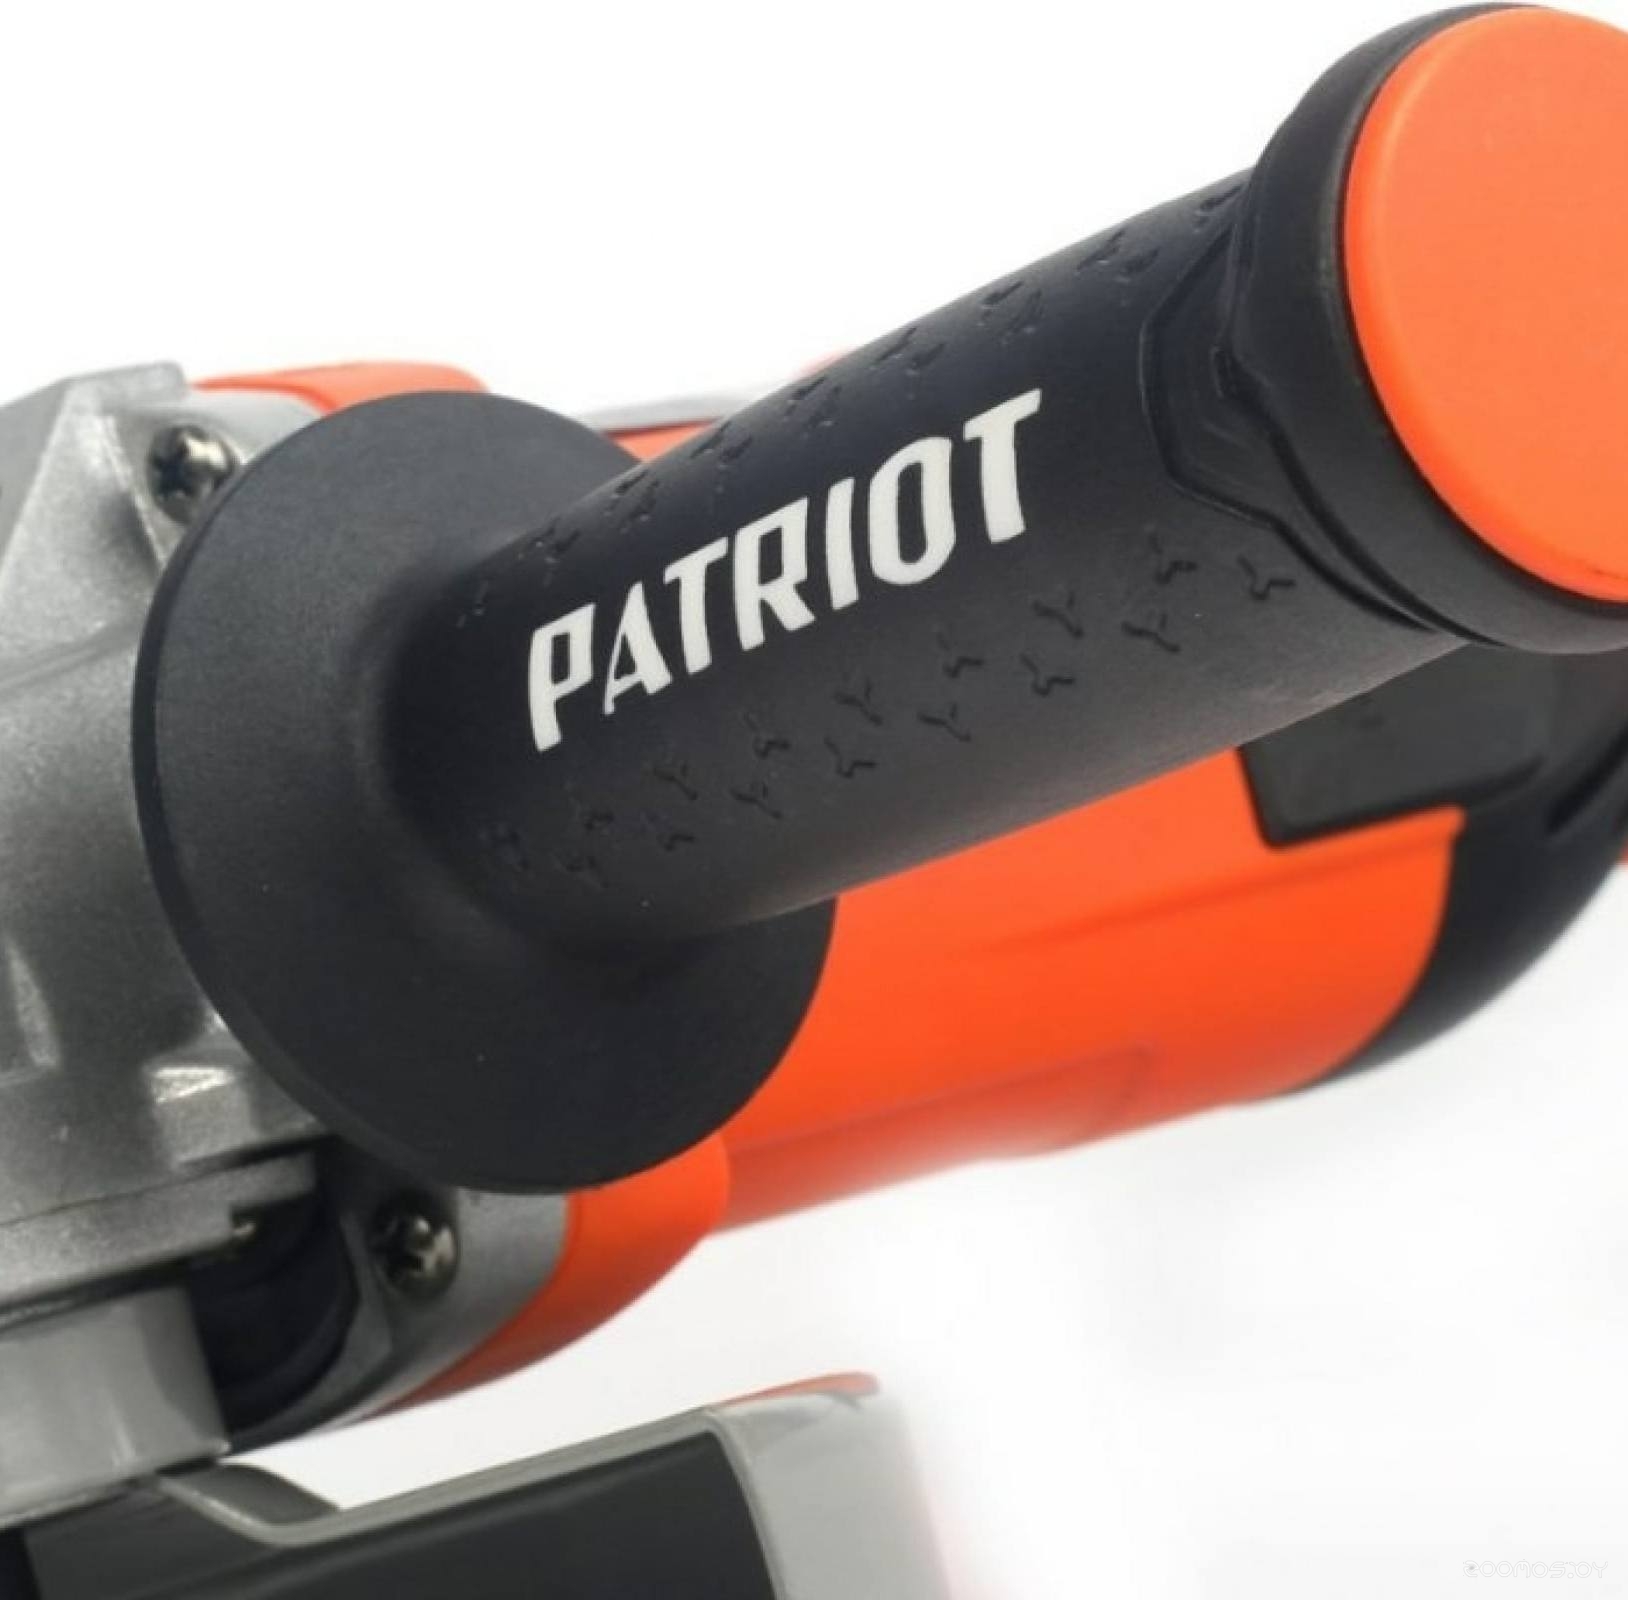   Patriot AG128     